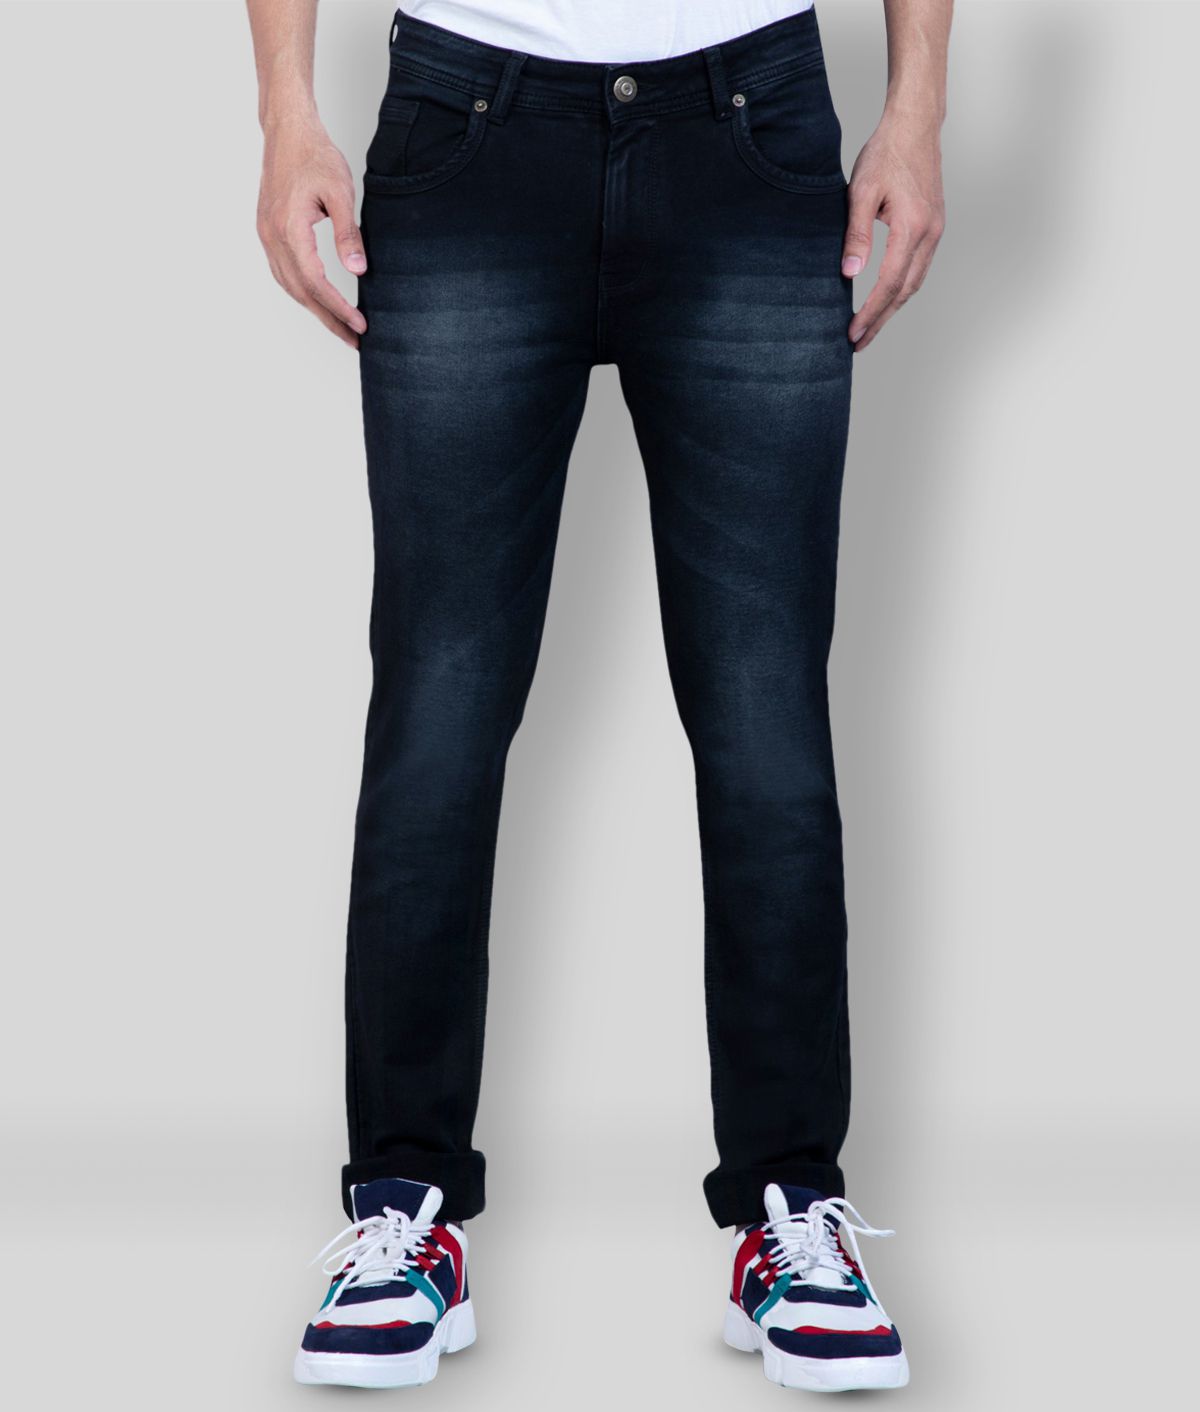 HJ HASASI - Black 100% Cotton Regular Fit Men's Jeans ( Pack of 1 )